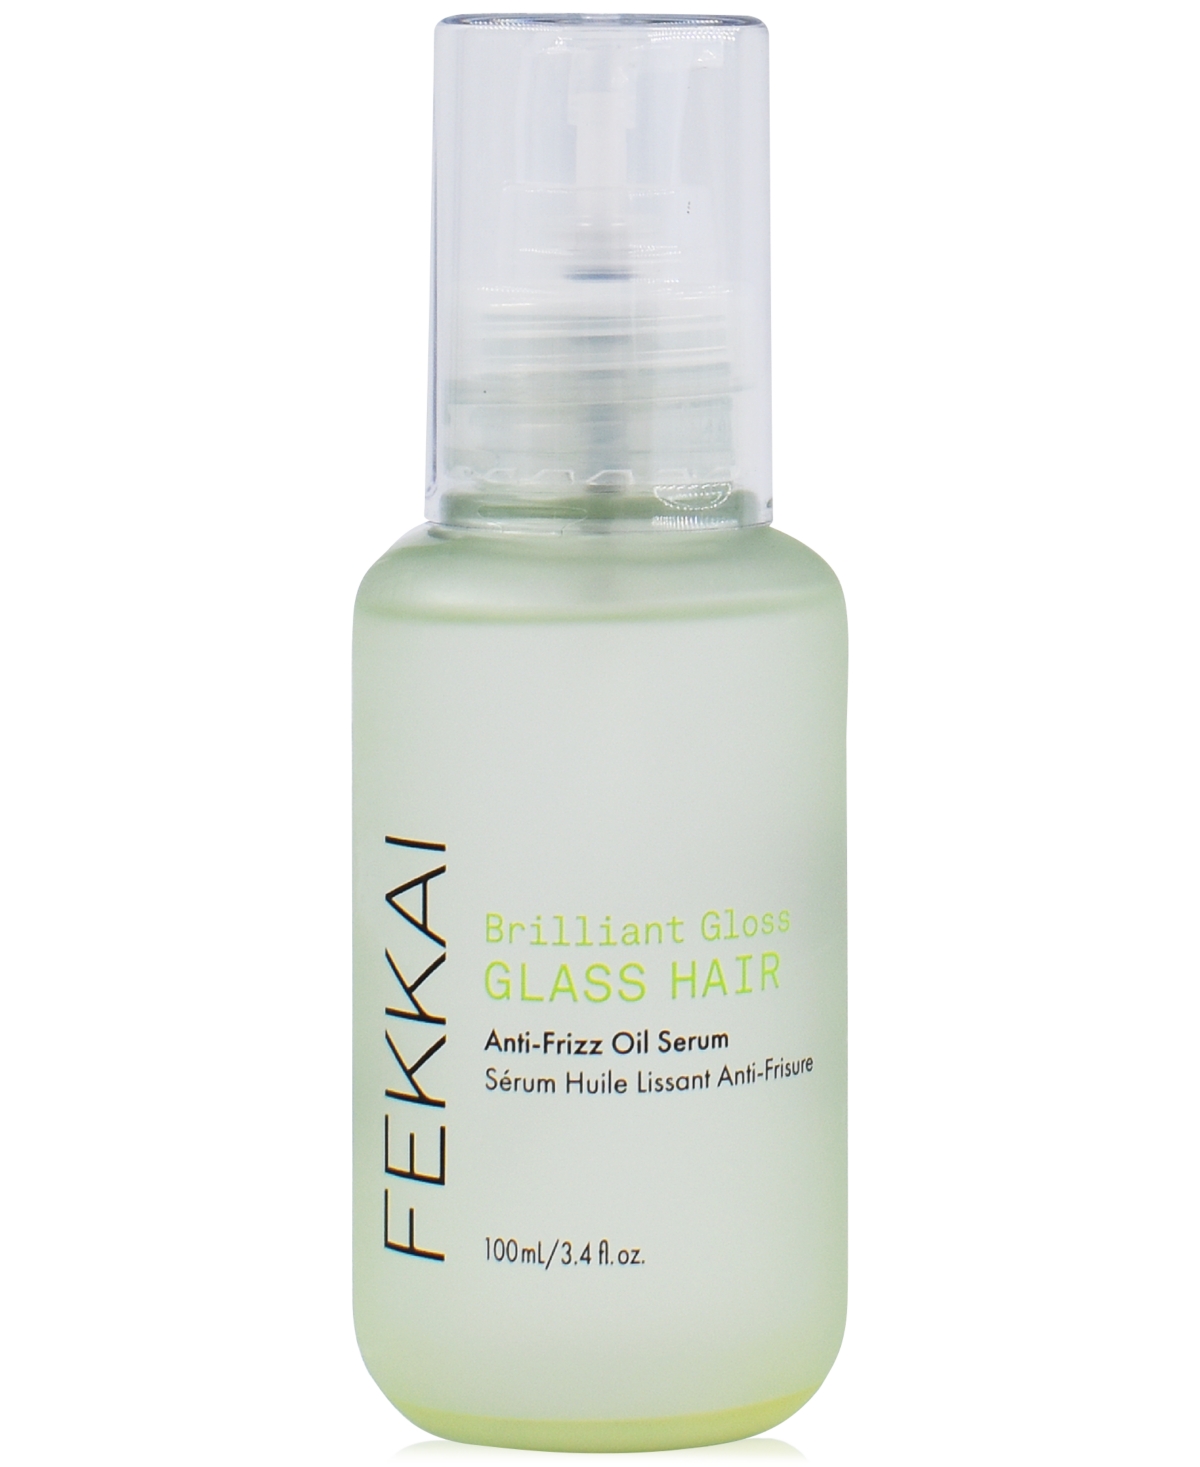 Fekkai Brilliant Gloss Glass Hair Anti-frizz Oil Serum, 3.4 oz.